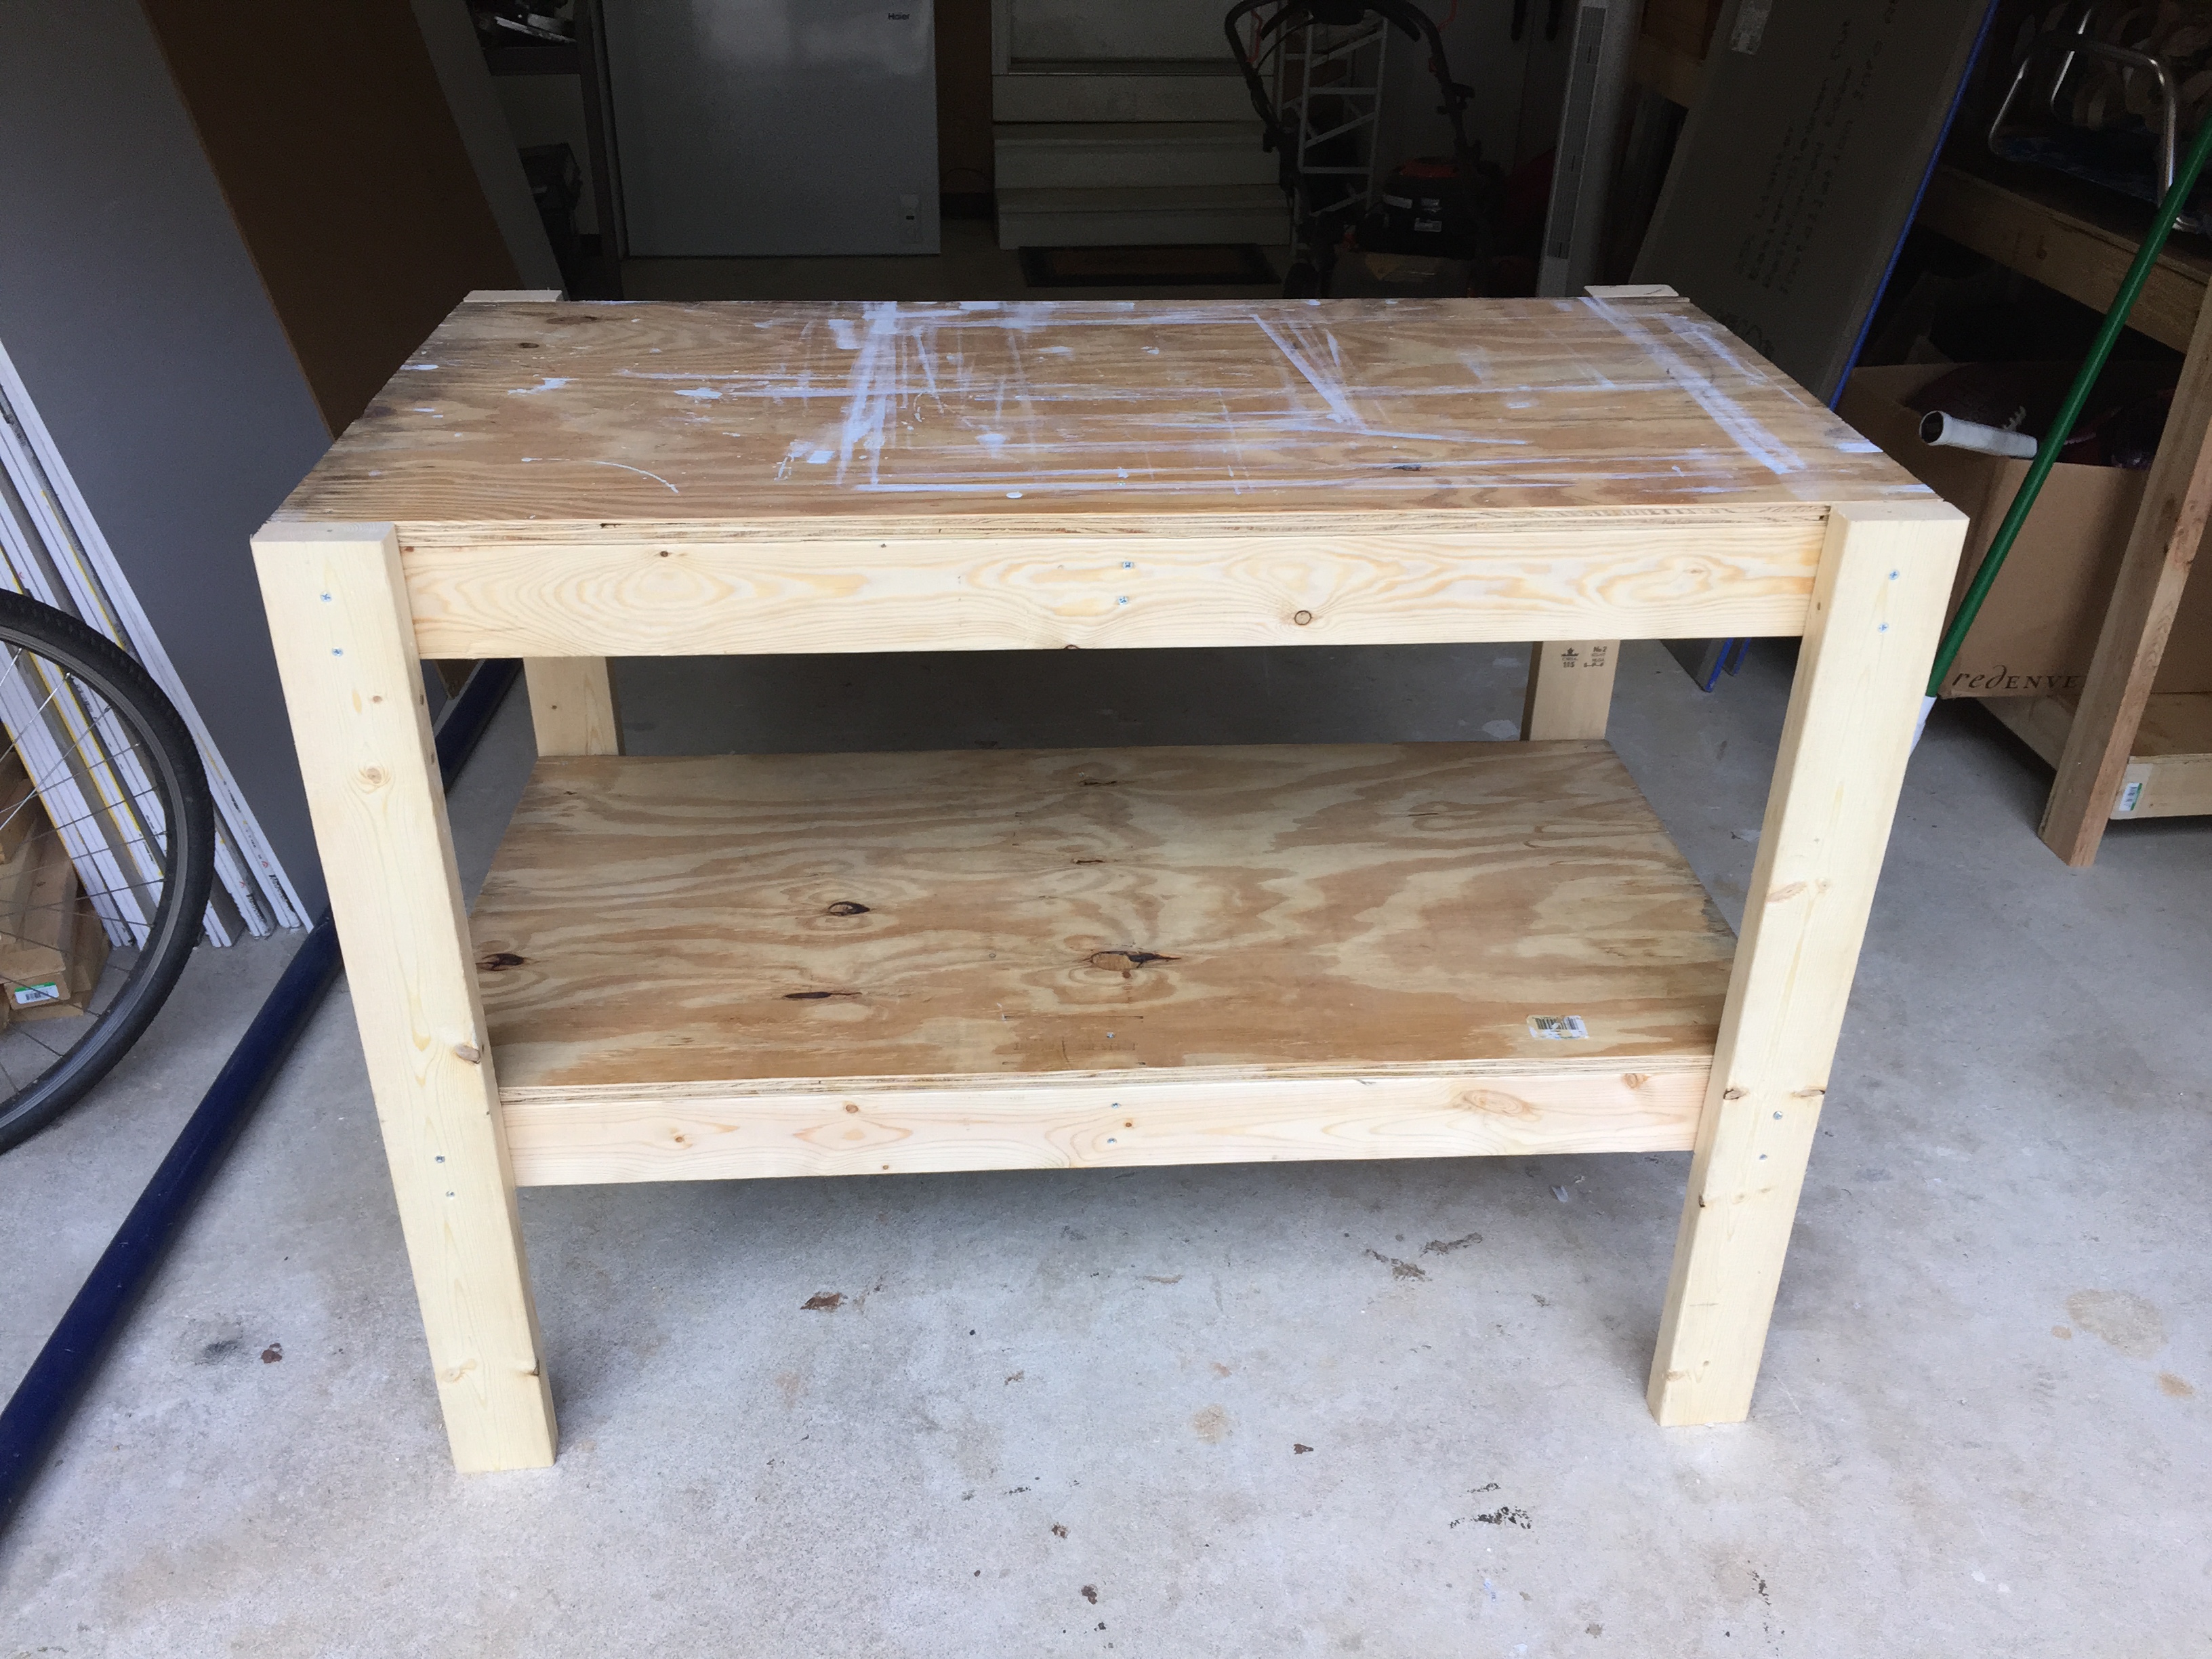 DIY Workbench